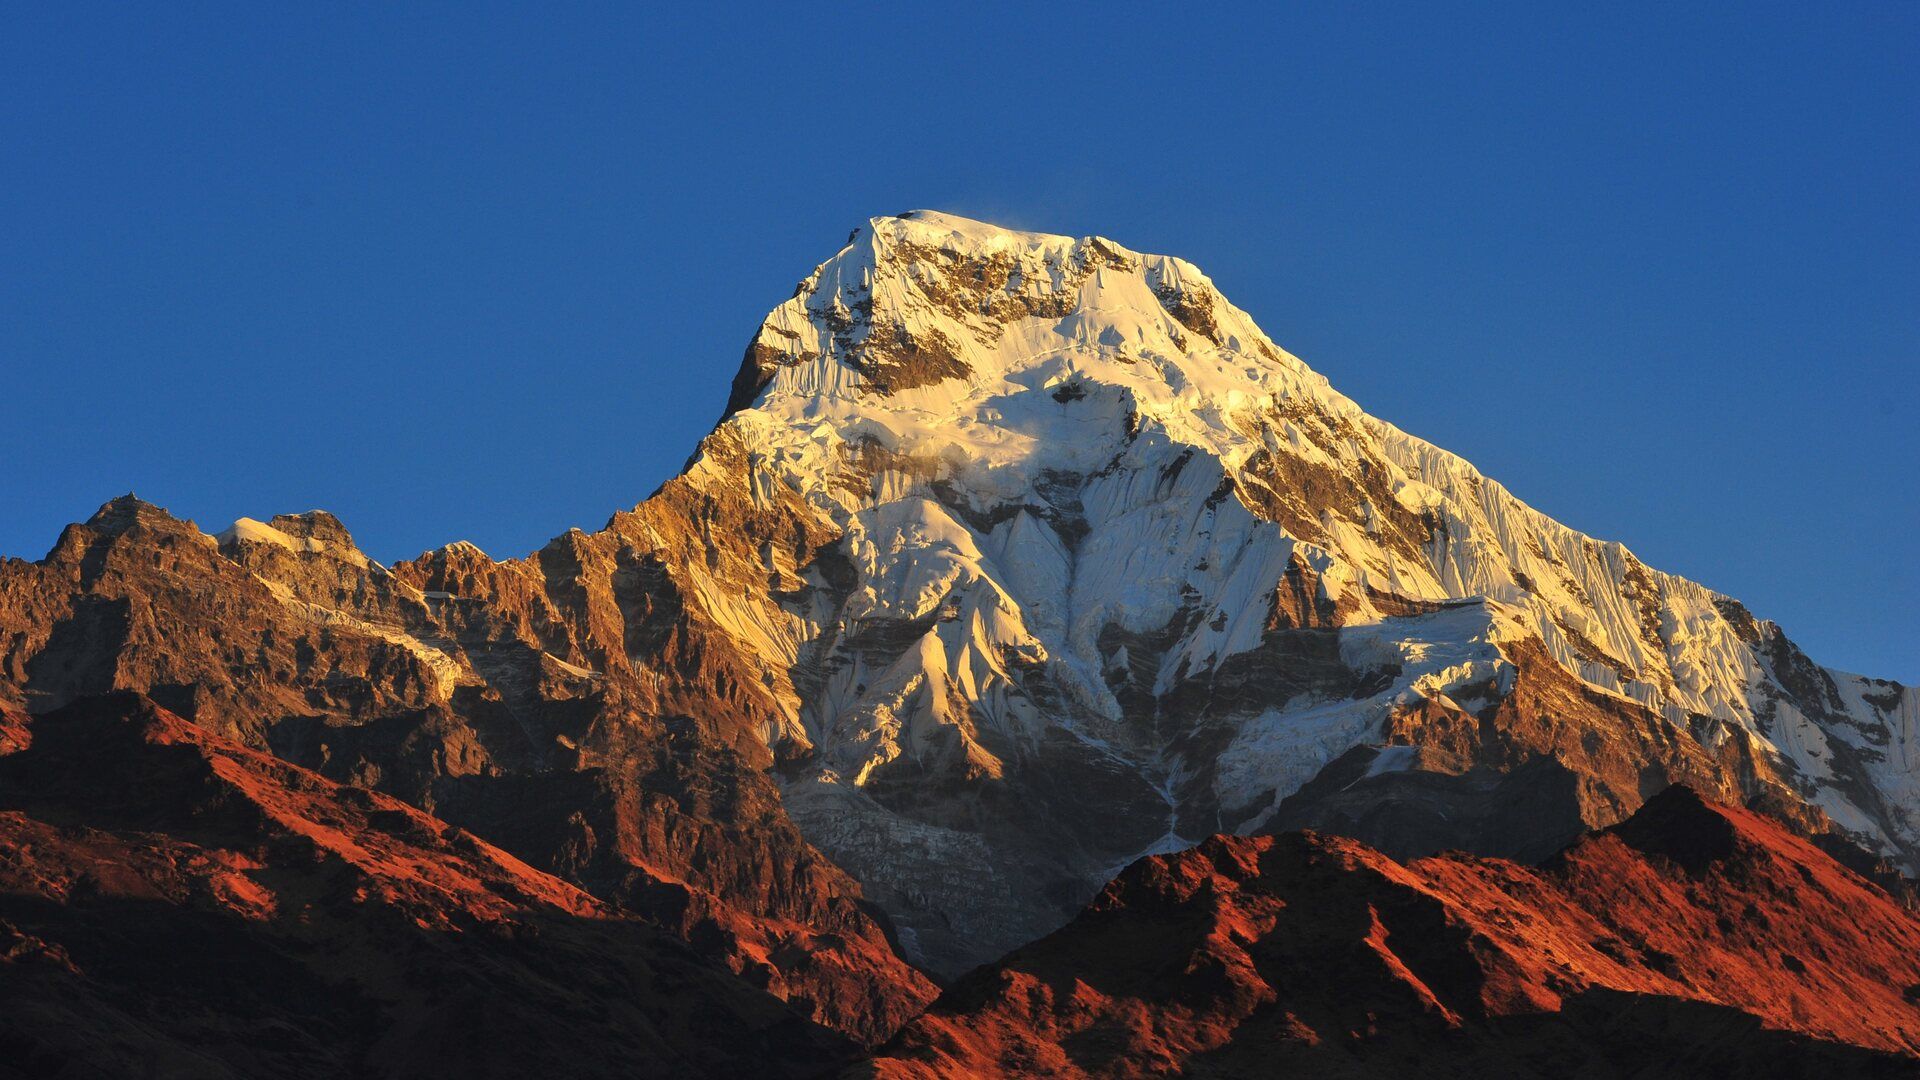 Annapurna Massif Mountain Range Nepal 4k Laptop Full HD 1080P HD 4k Wallpaper, Image, Background, Photo and Picture